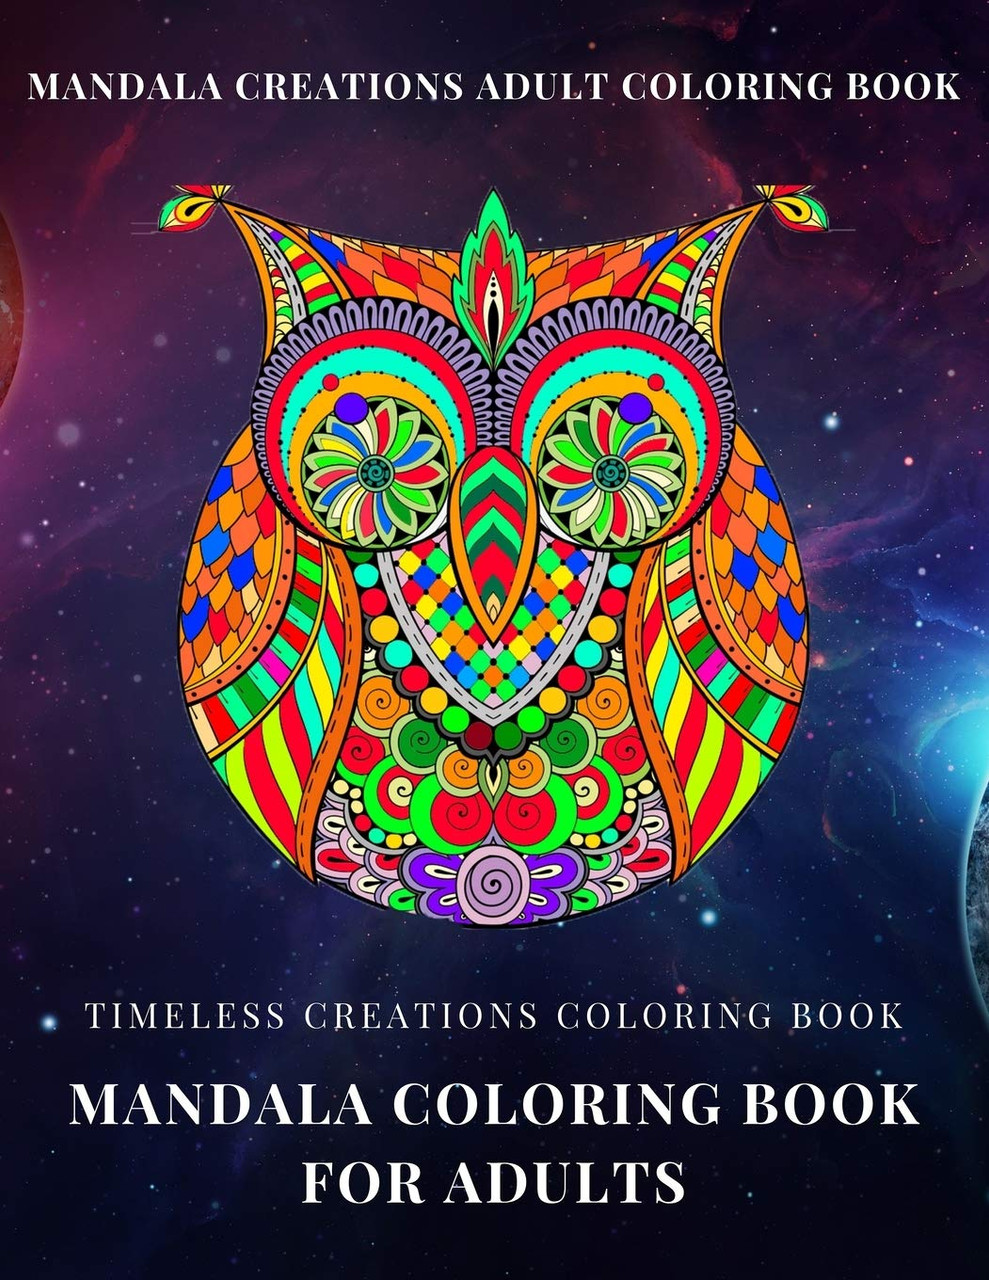 Timeless Creations Coloring book: mandala coloring book for adults: mandala  creations adult coloring book - BookPal